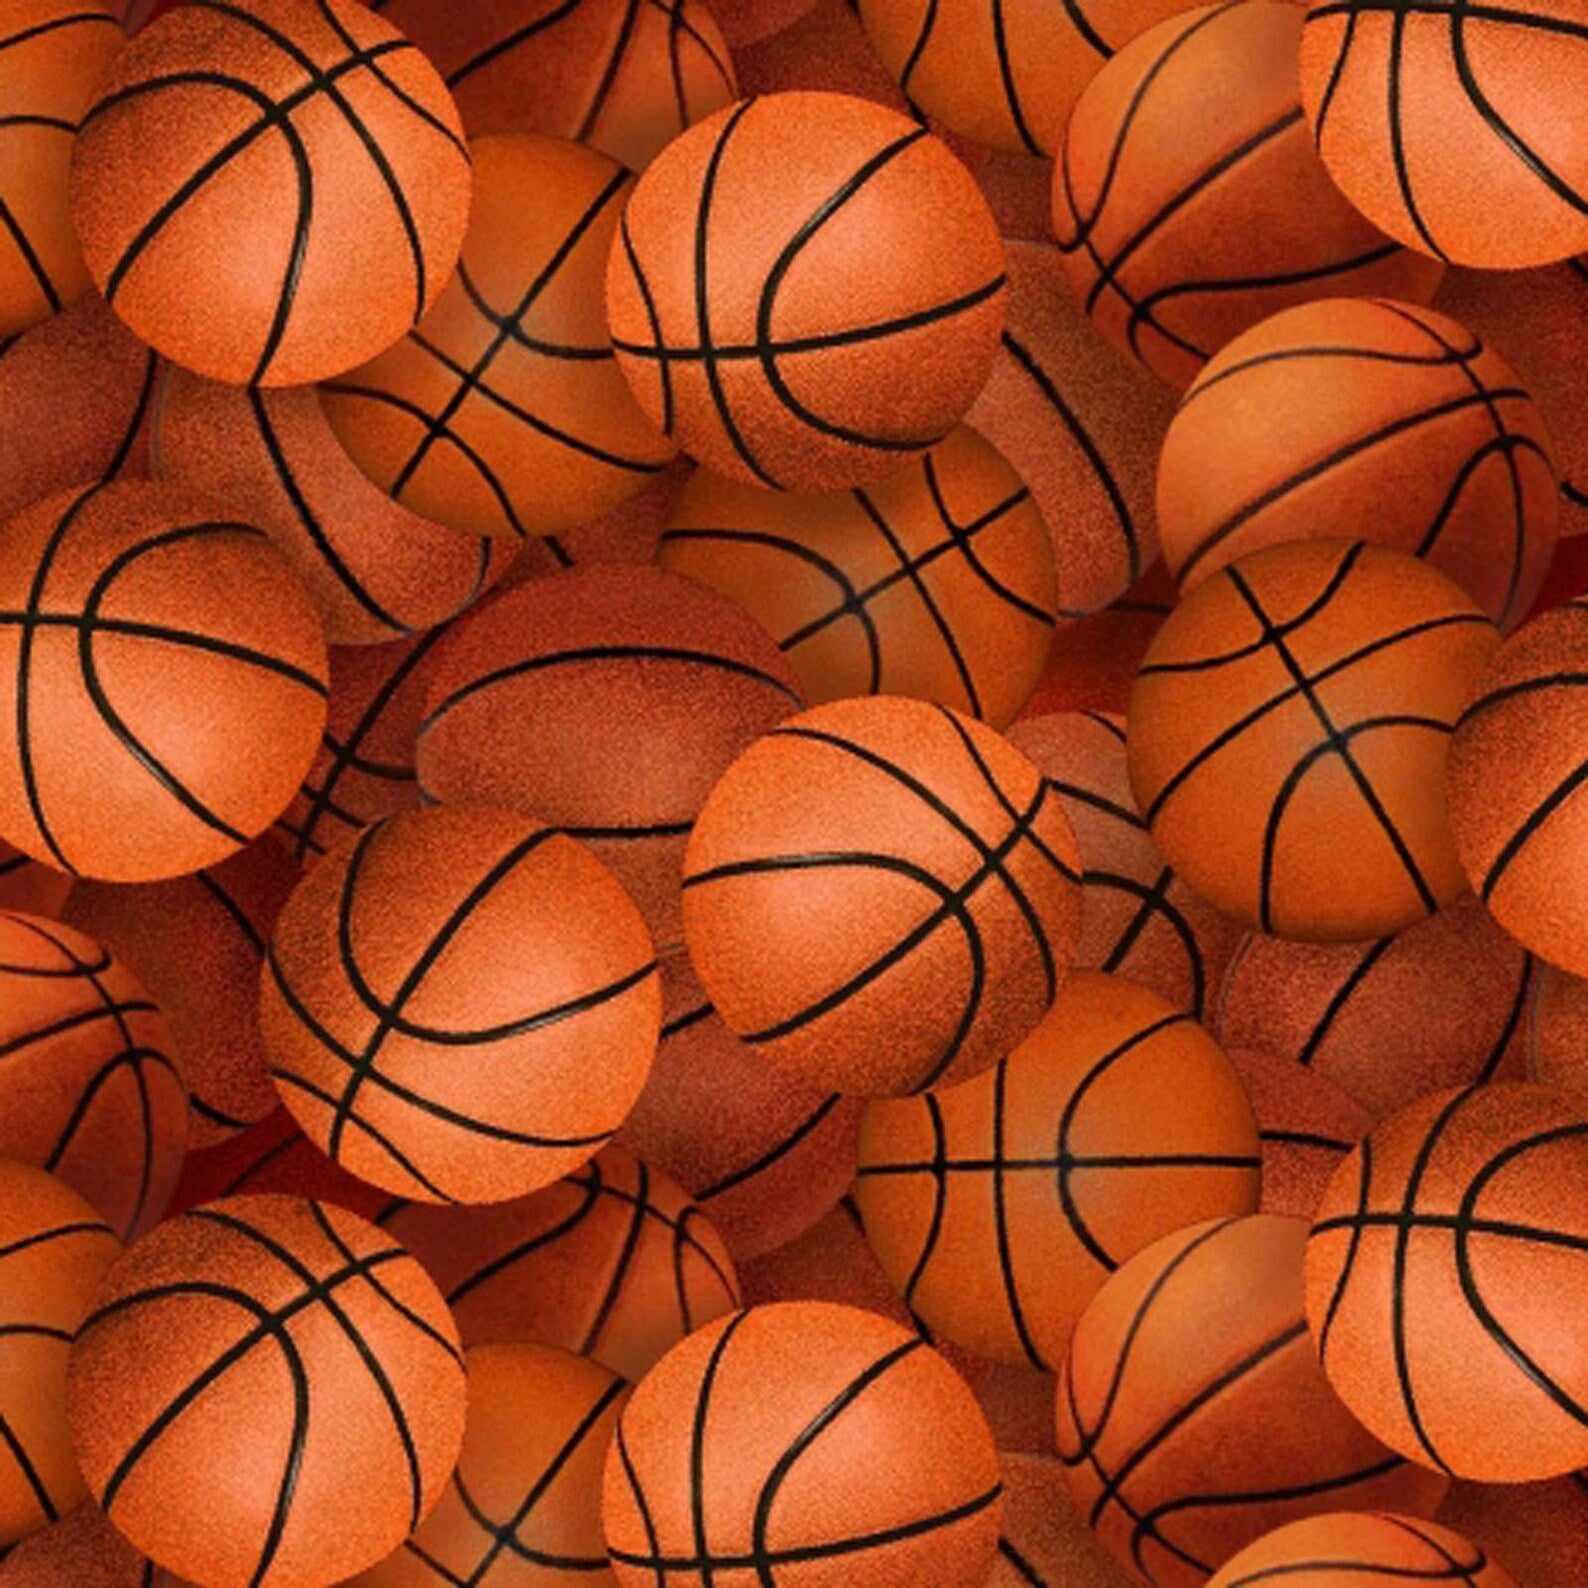 Basketballs by Elizabeth's Studio